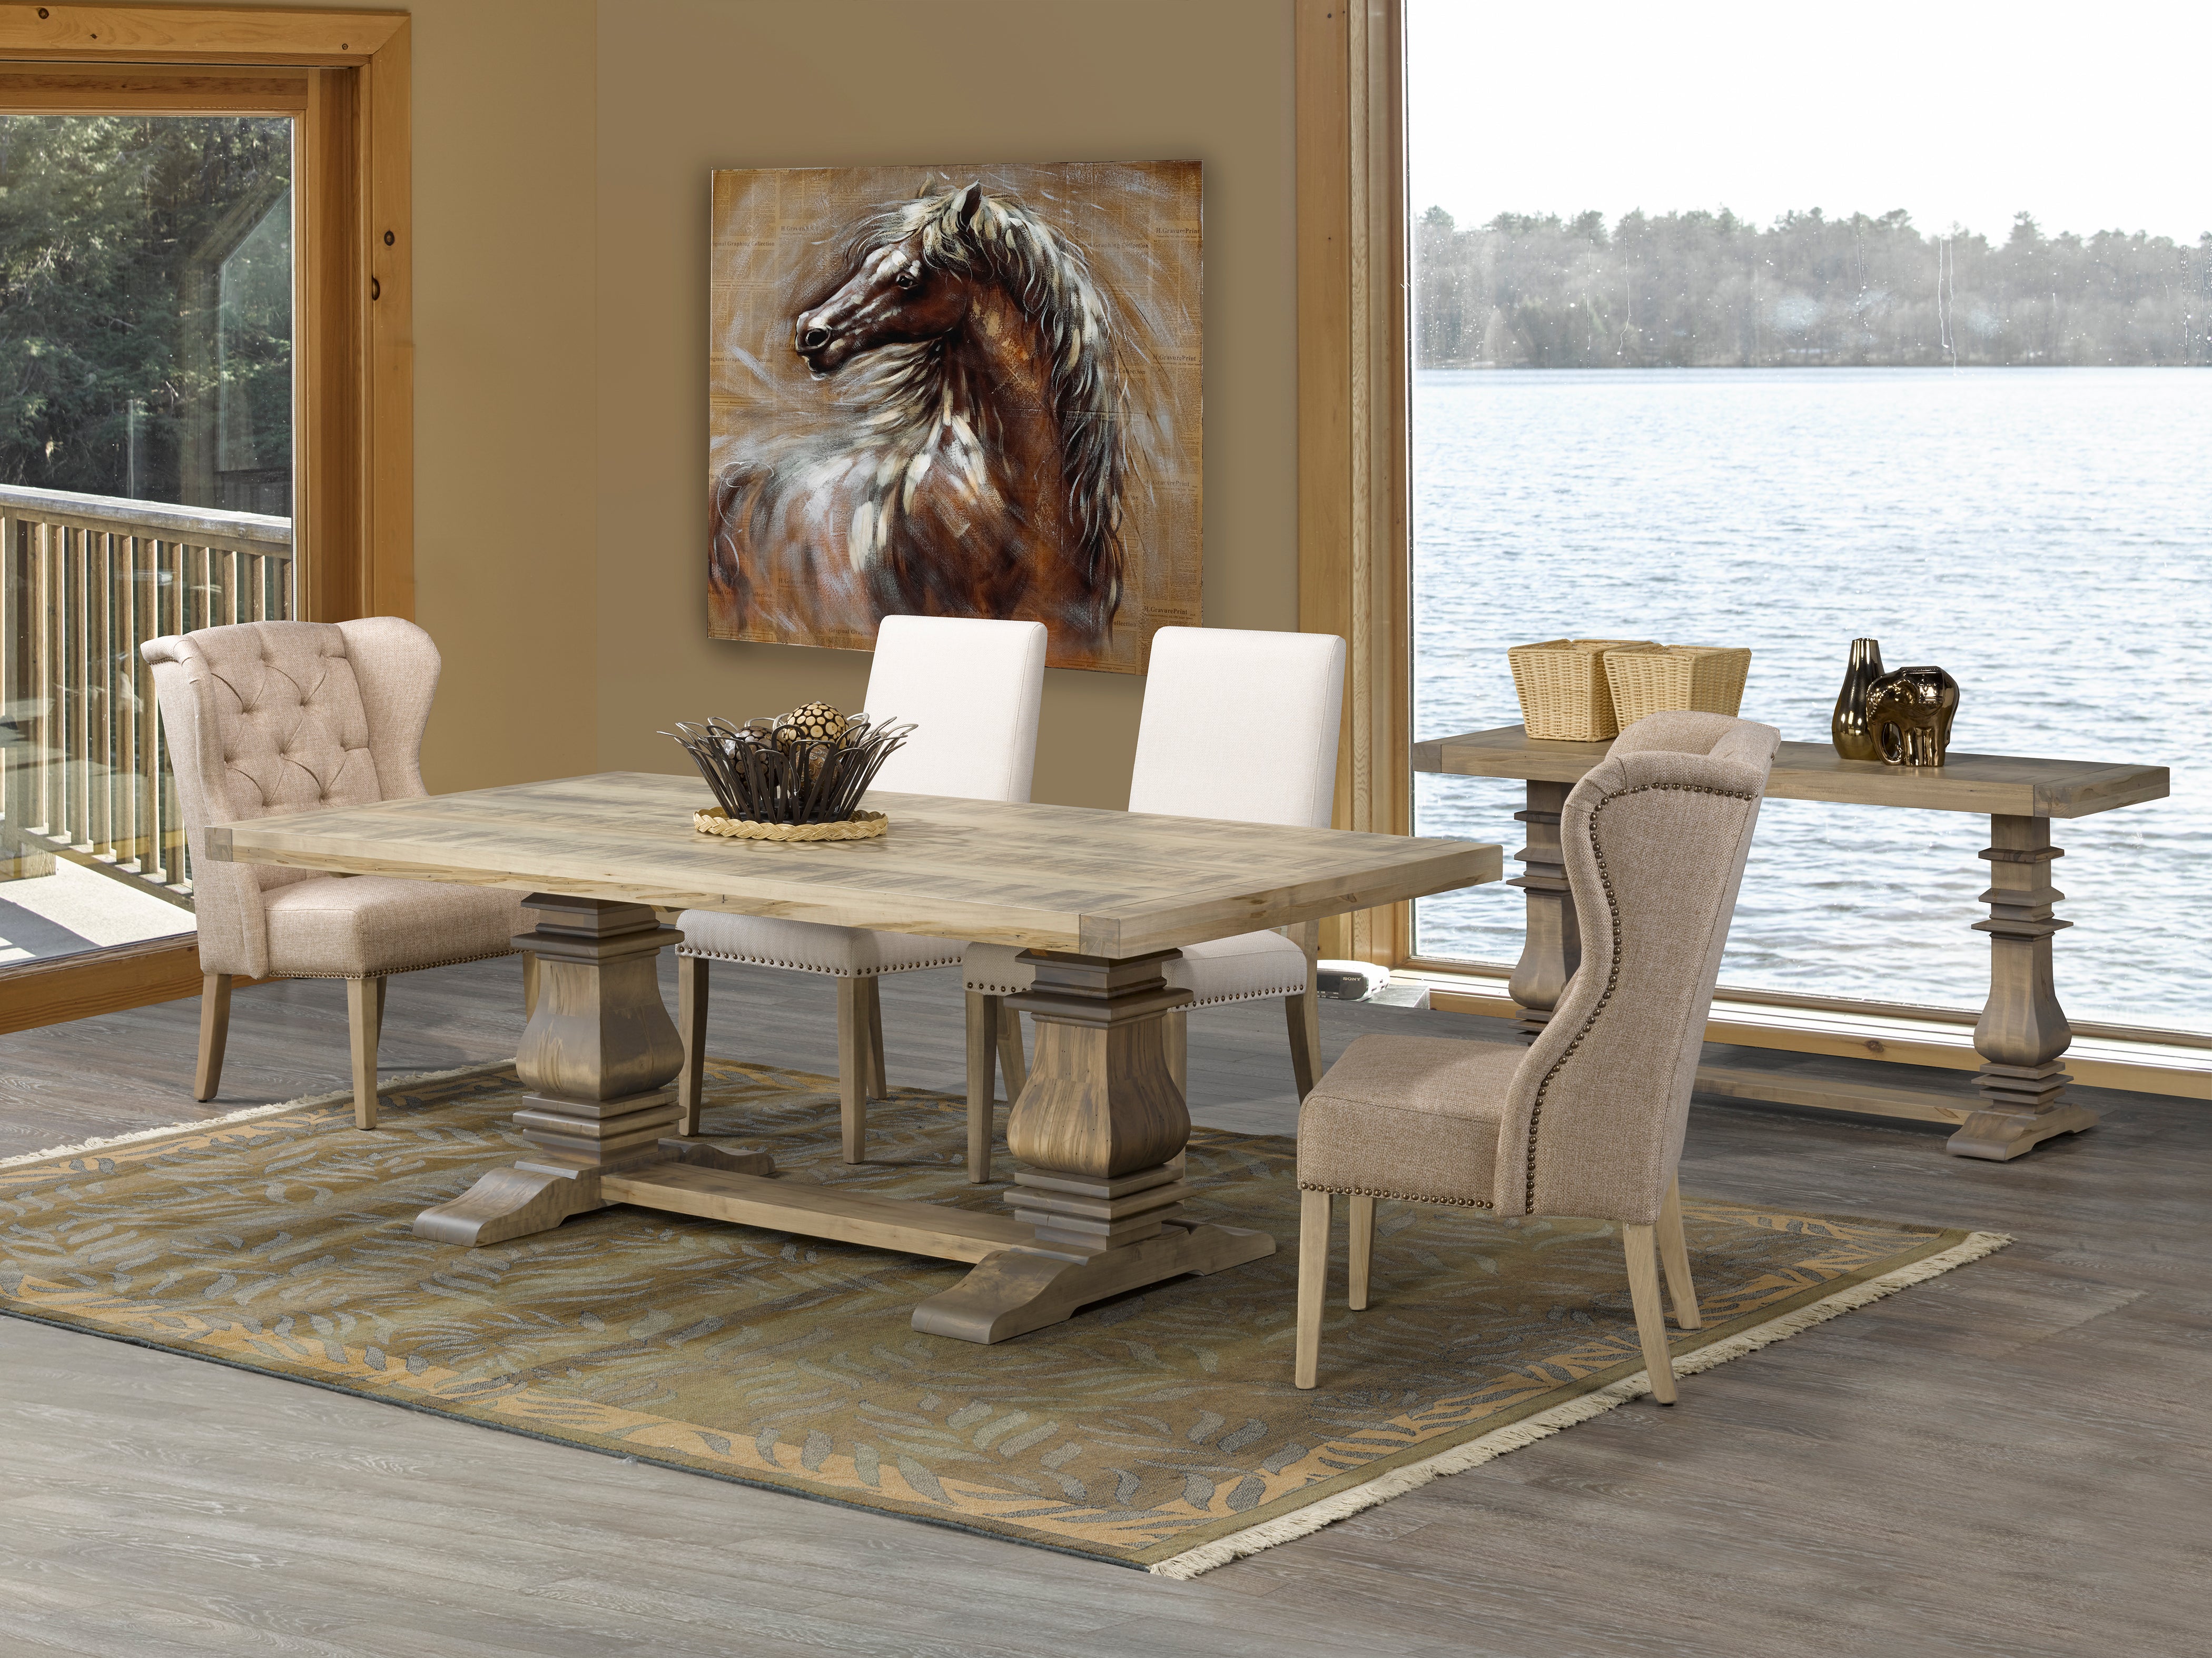 Chair as Shown | Cardinal Woodcraft Terra Dining Chair - Black Sea | Valley Ridge Furniture